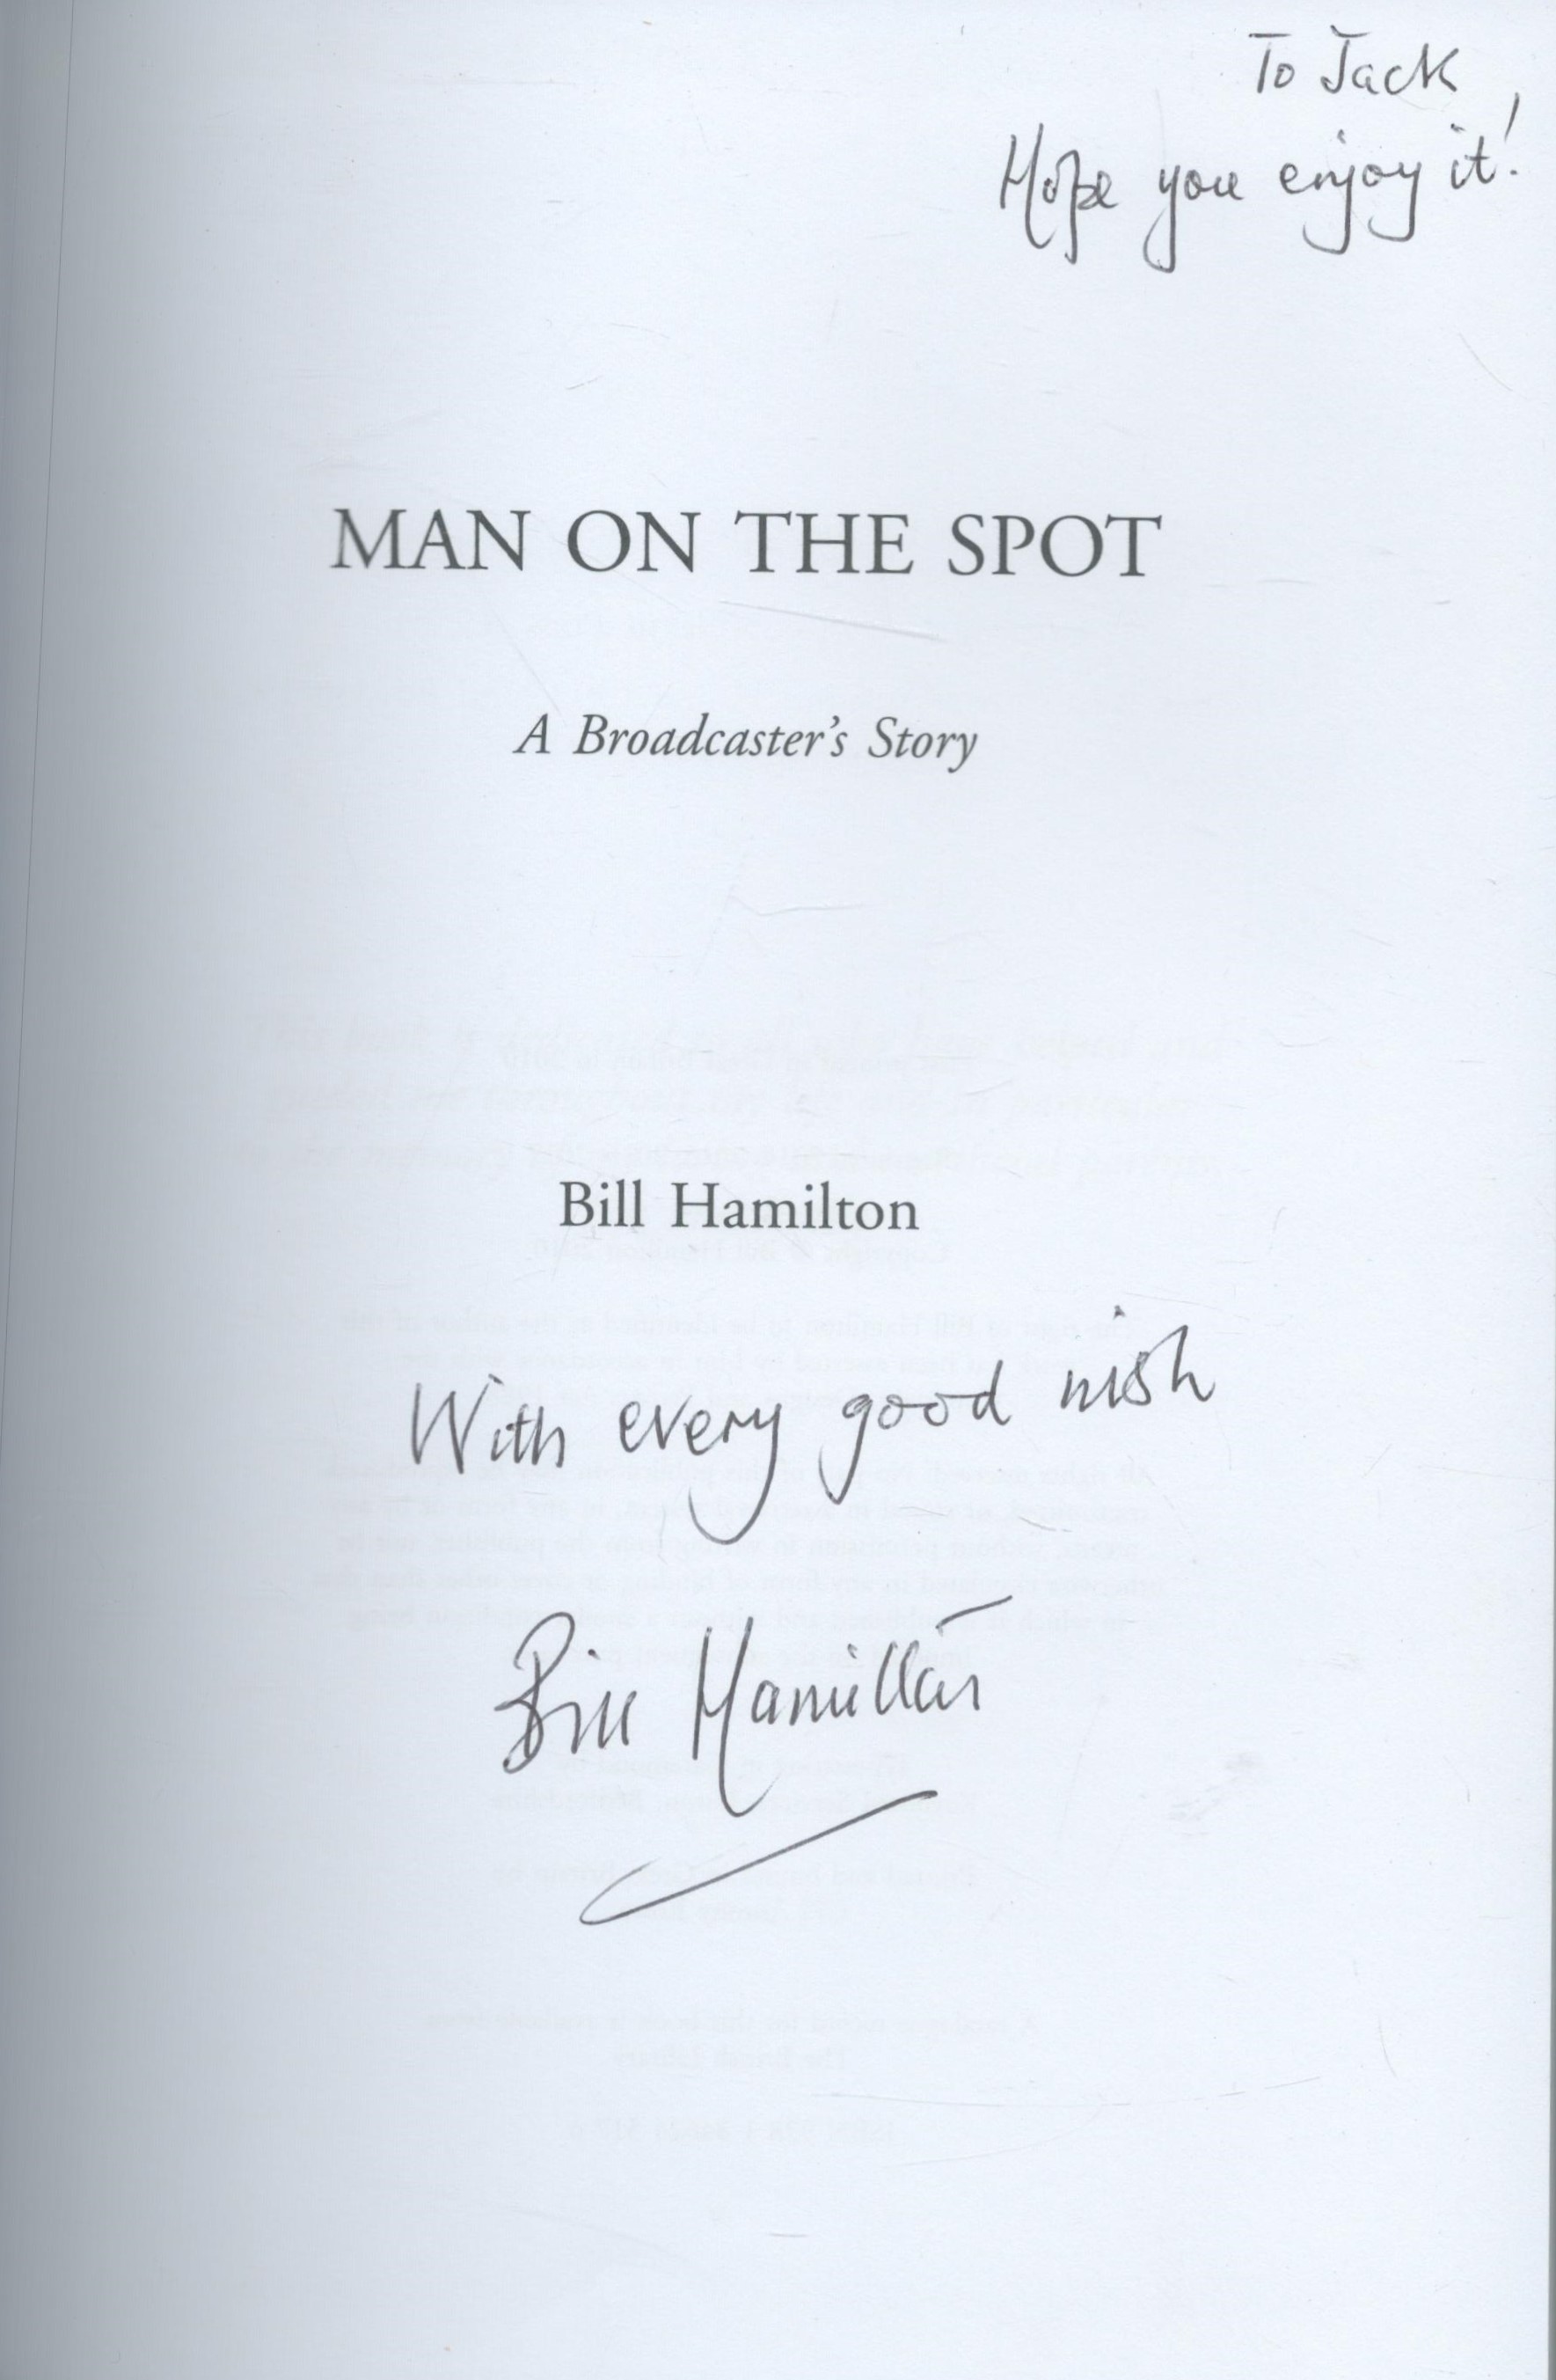 Bill Hamilton Signed Book - Man on The Spot - A Broadcaster's Story by Bill Hamilton 2017 hardback - Image 2 of 3